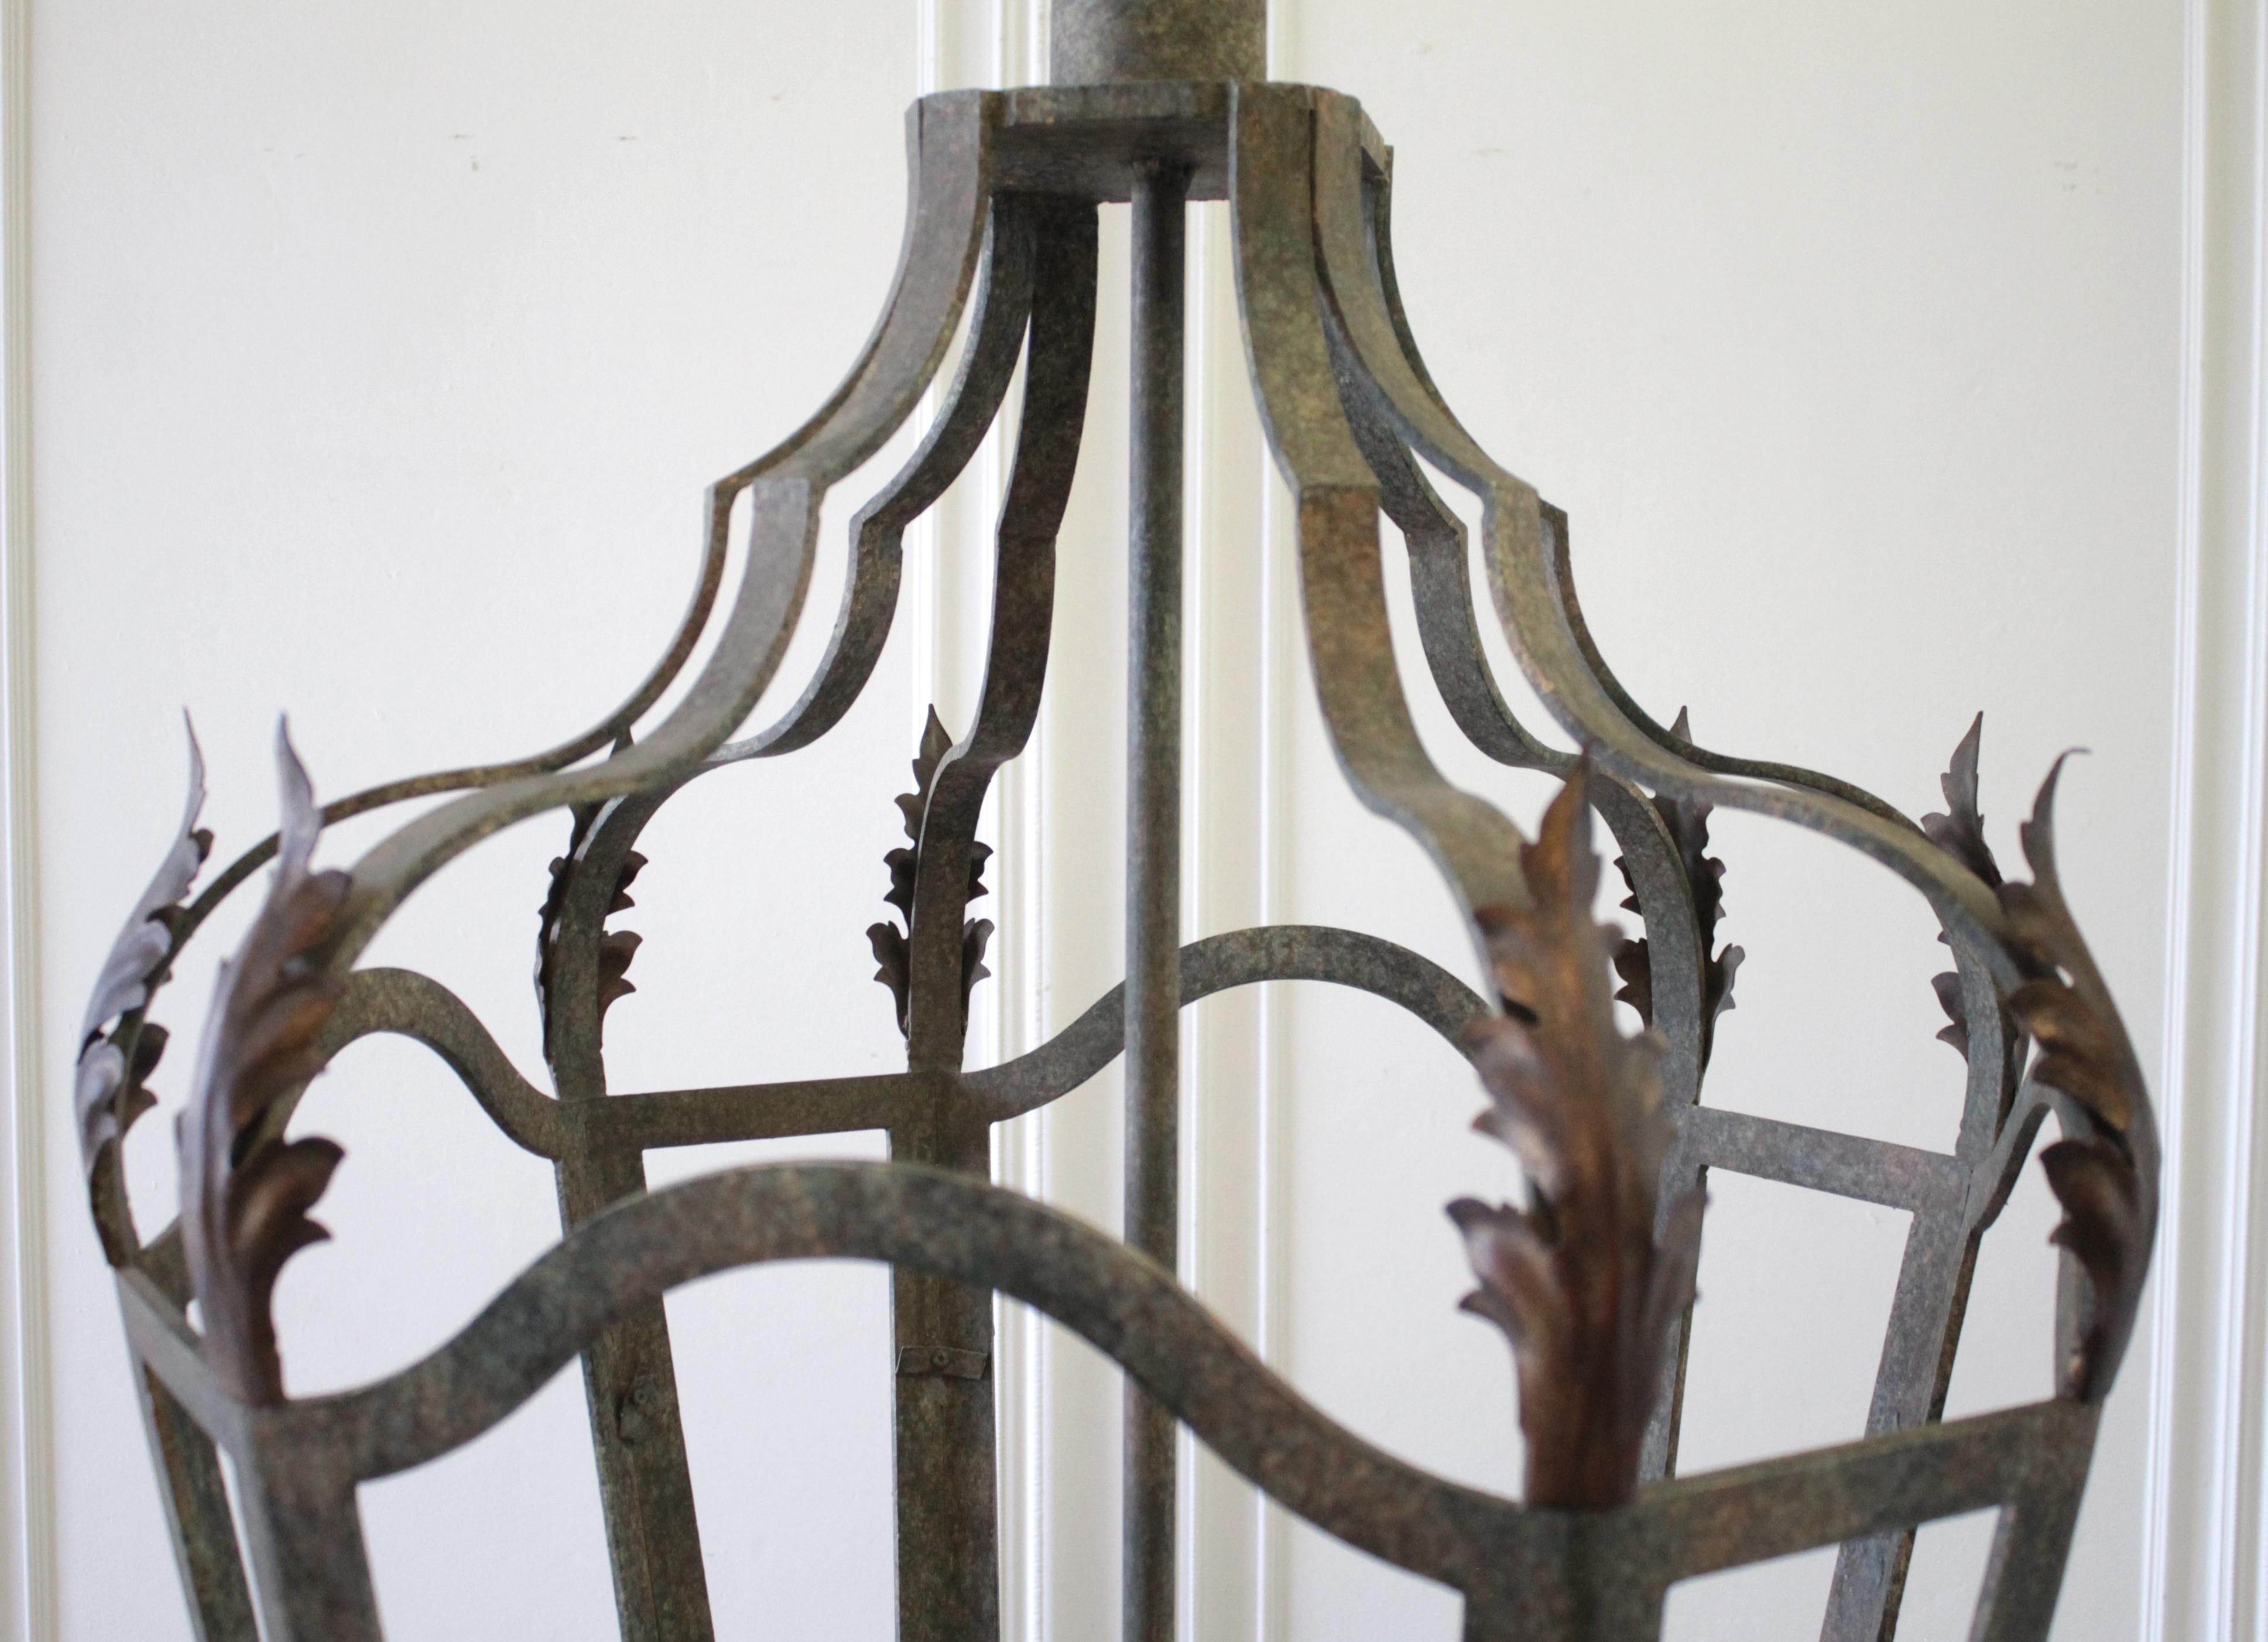 Beautiful iron lantern pendant has great patina, and decorative leaf details.
Measures: 29